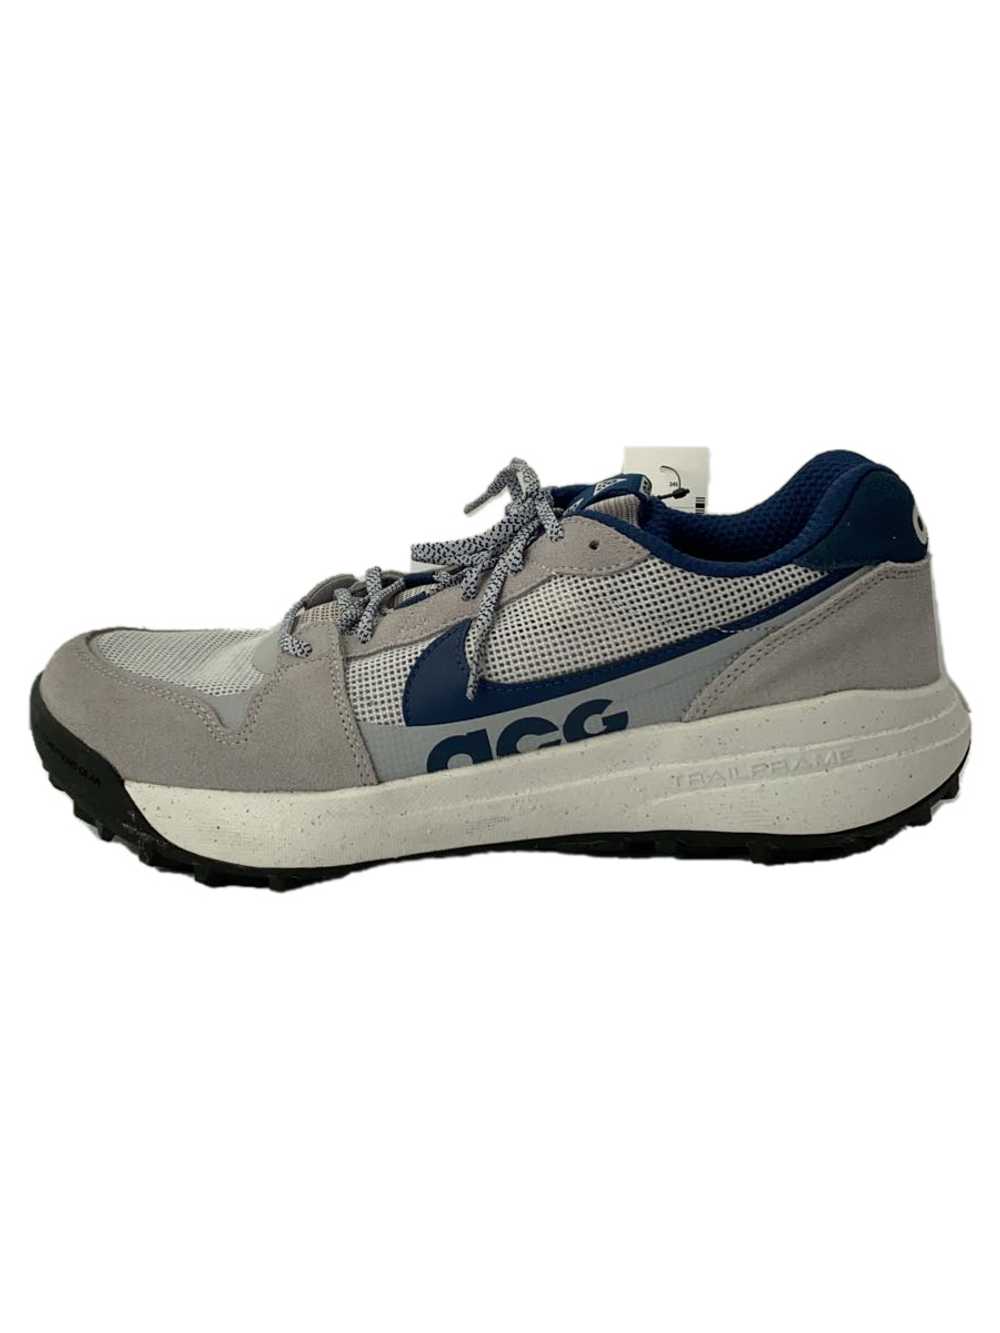 Nike Acg Lowcate Lowcate/Gry Shoes US10.5 KI346 - image 1